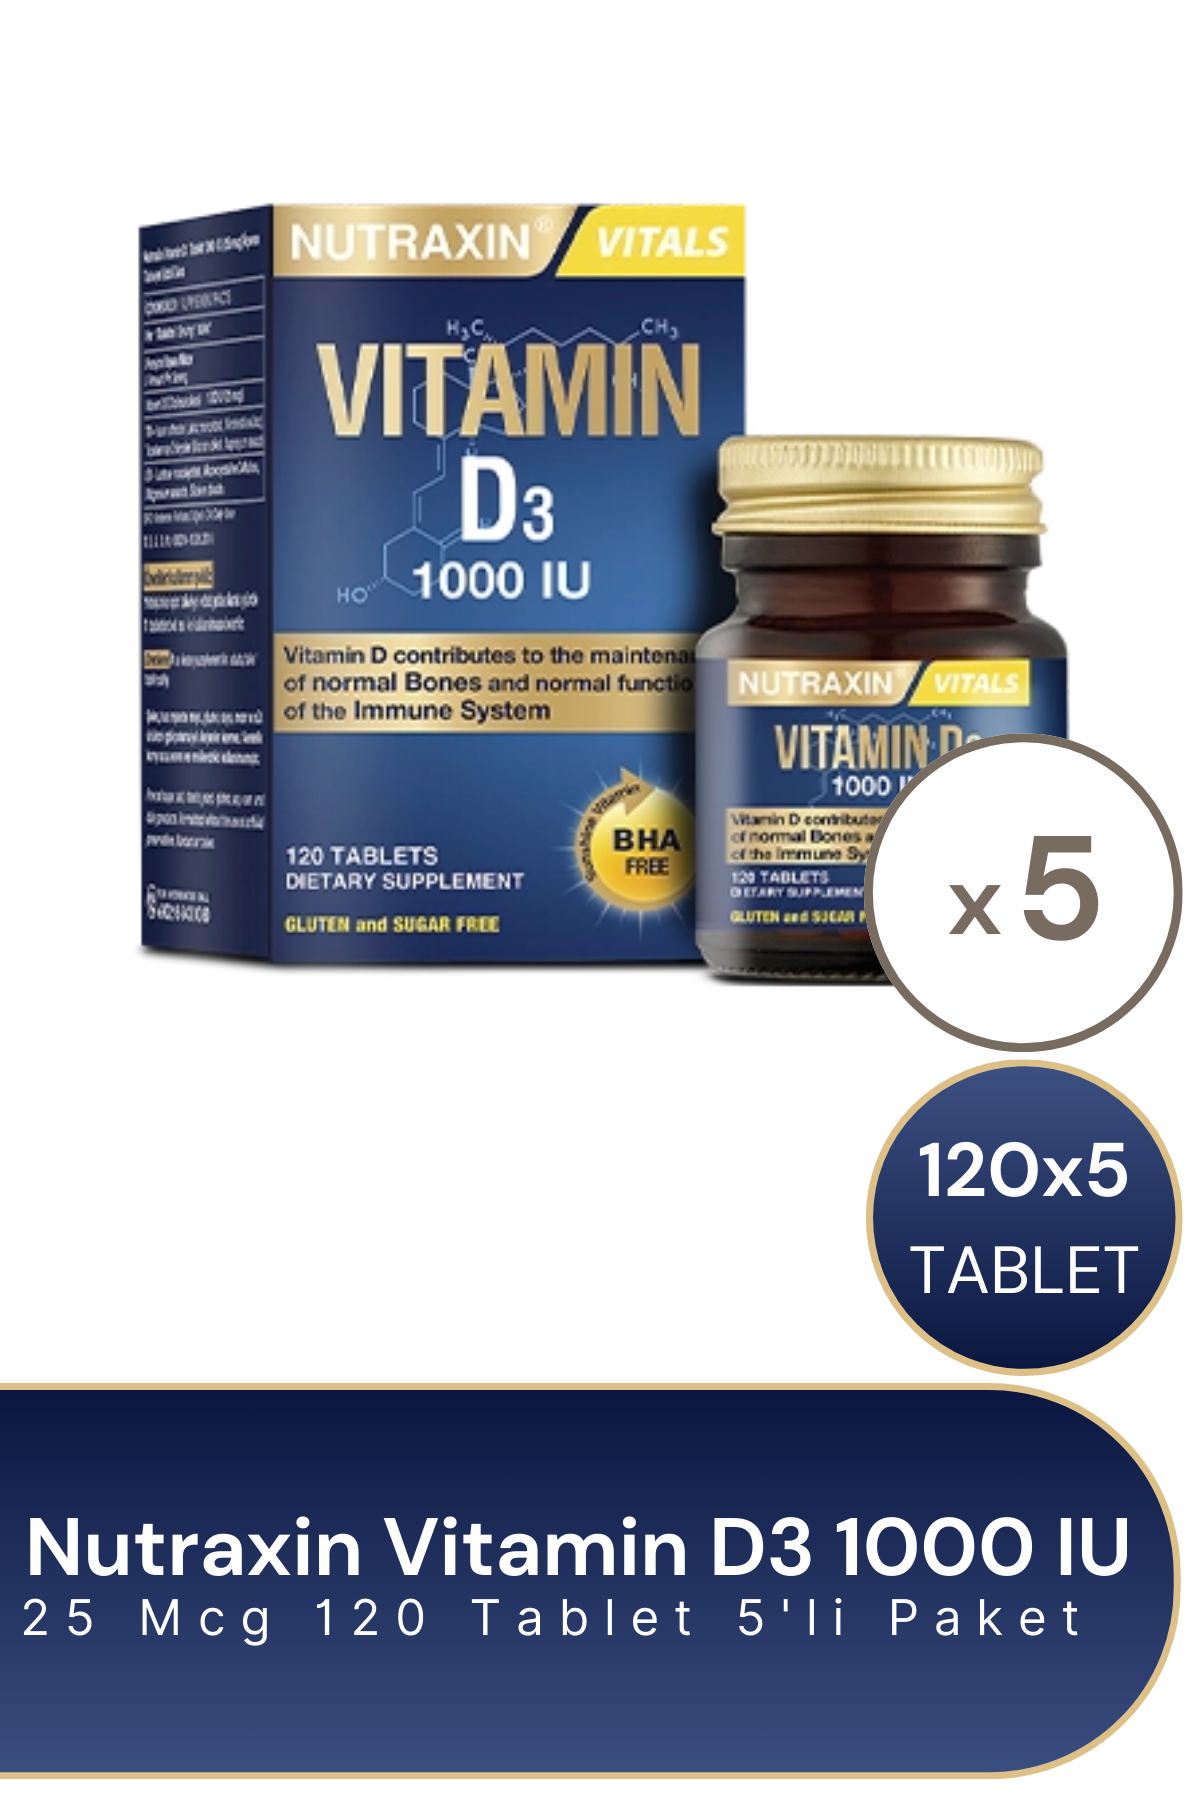 Nutraxin Vitamin D3 1000 IU 120 Tablet 5'li Paket